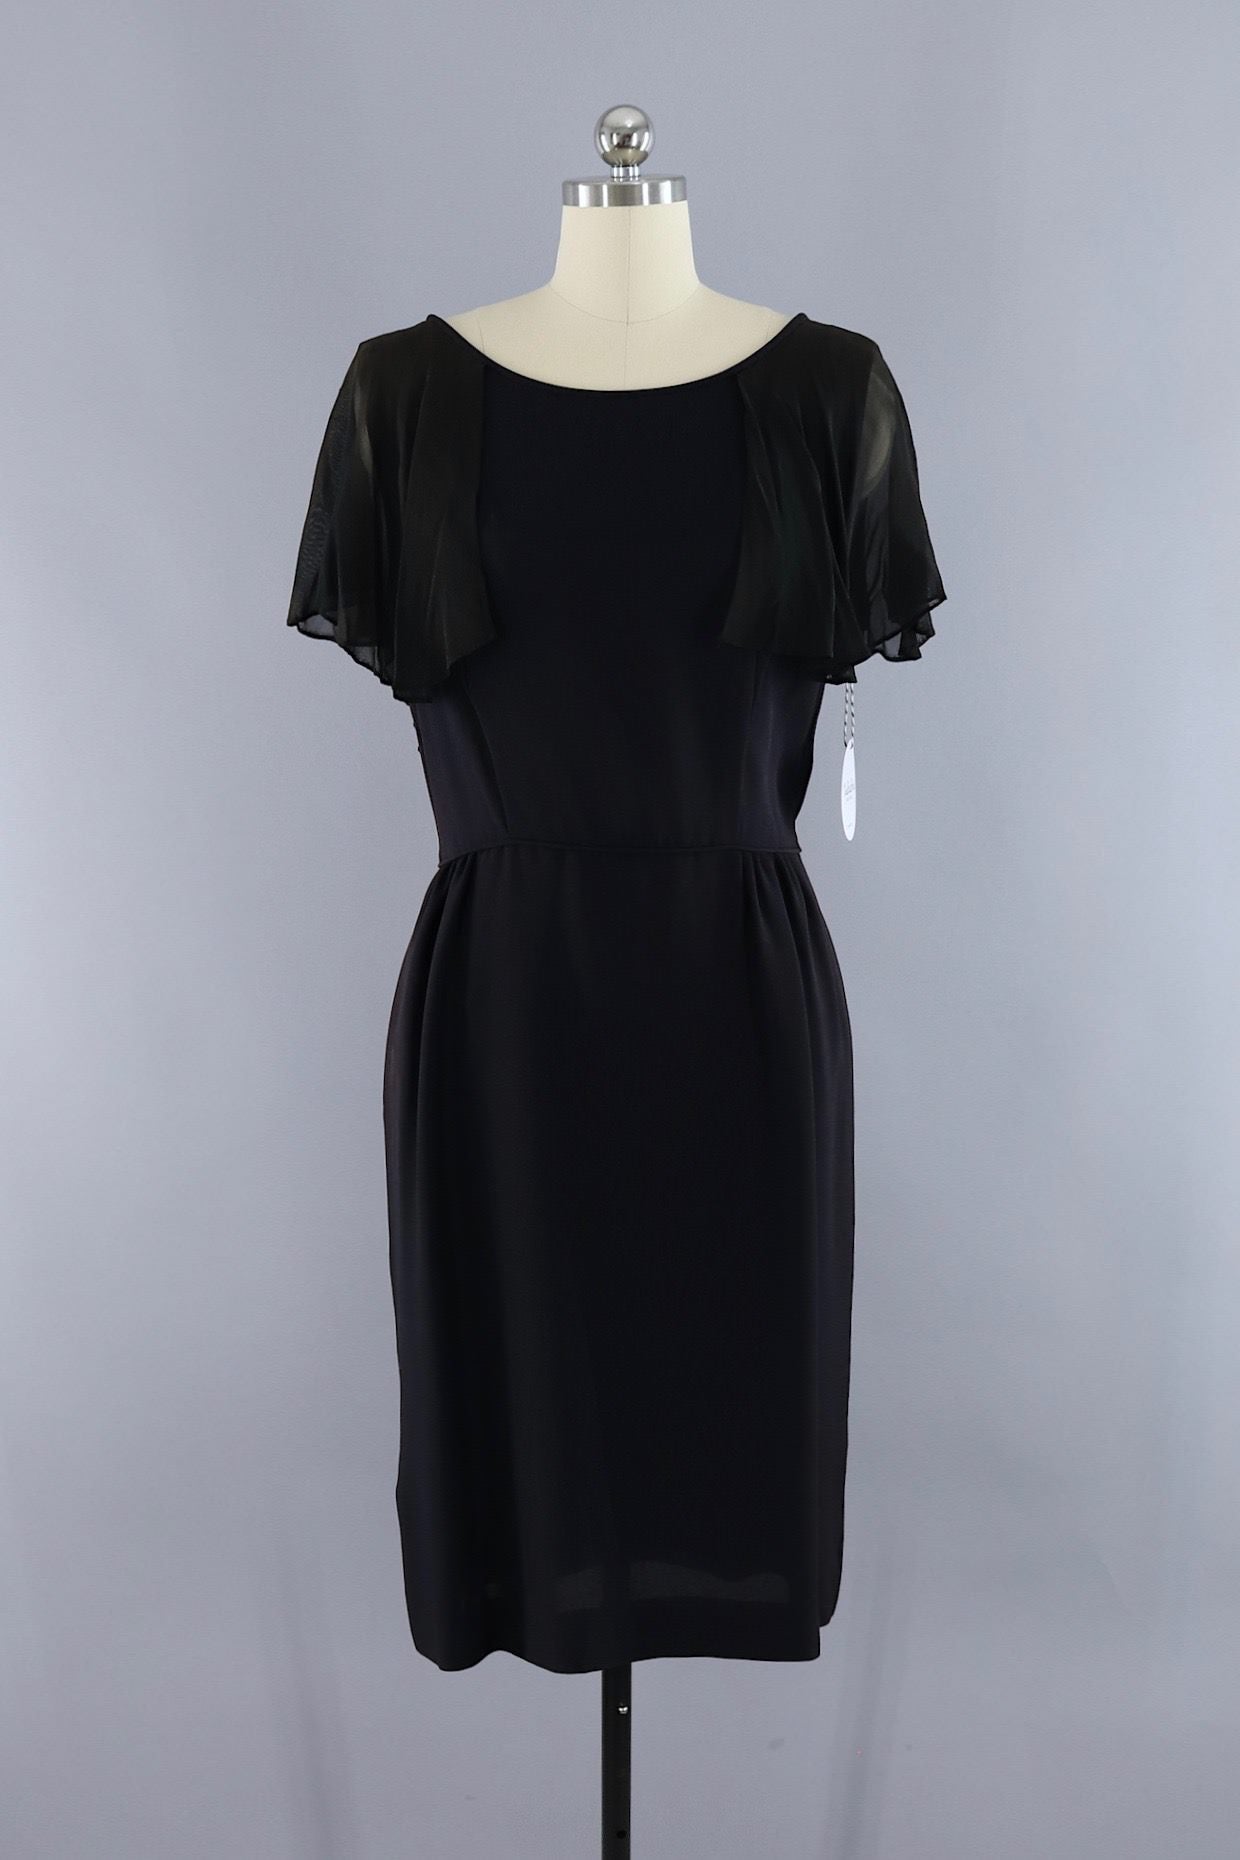 Vintage 1960s Black Dress with Chiffon Sleeves - ThisBlueBird